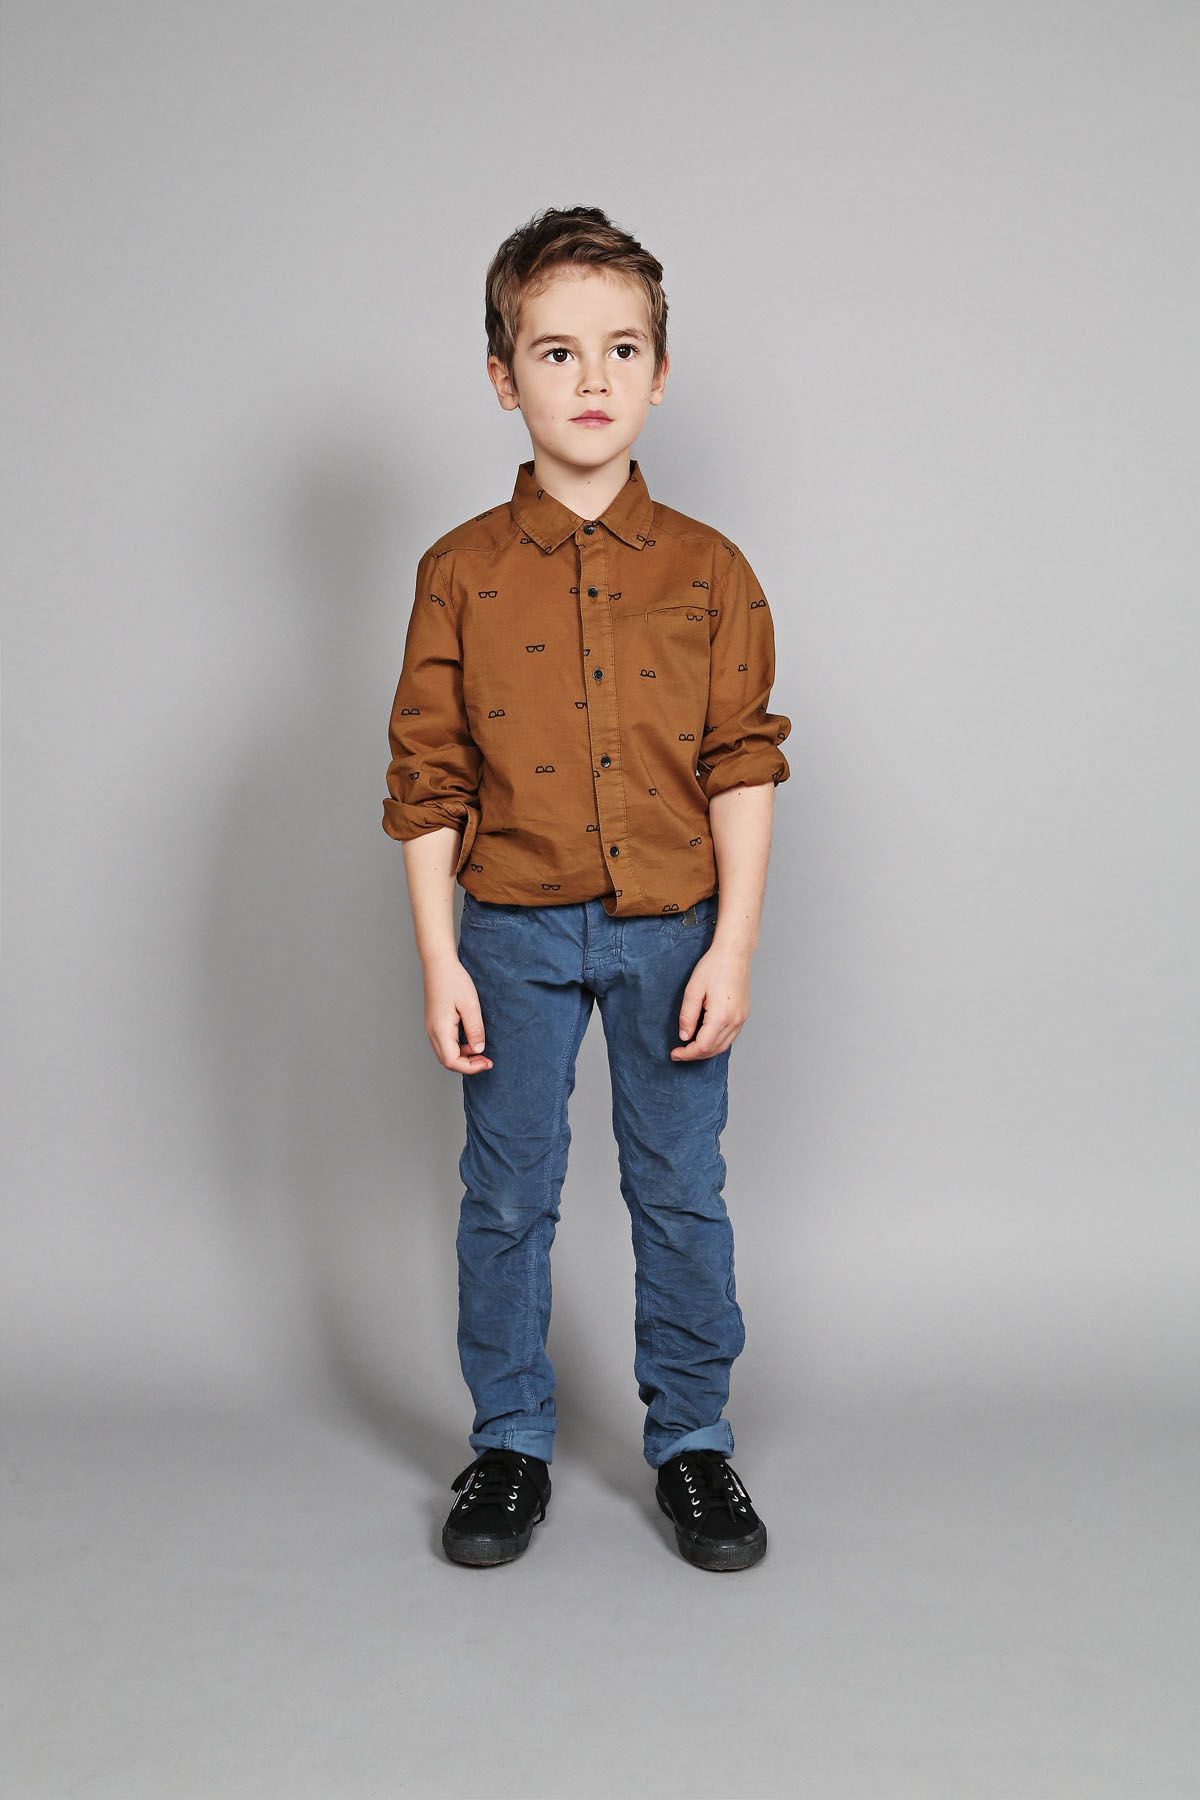 Kids Fashion Boy
 15 Boys Fashion Ideas for Daily Activity